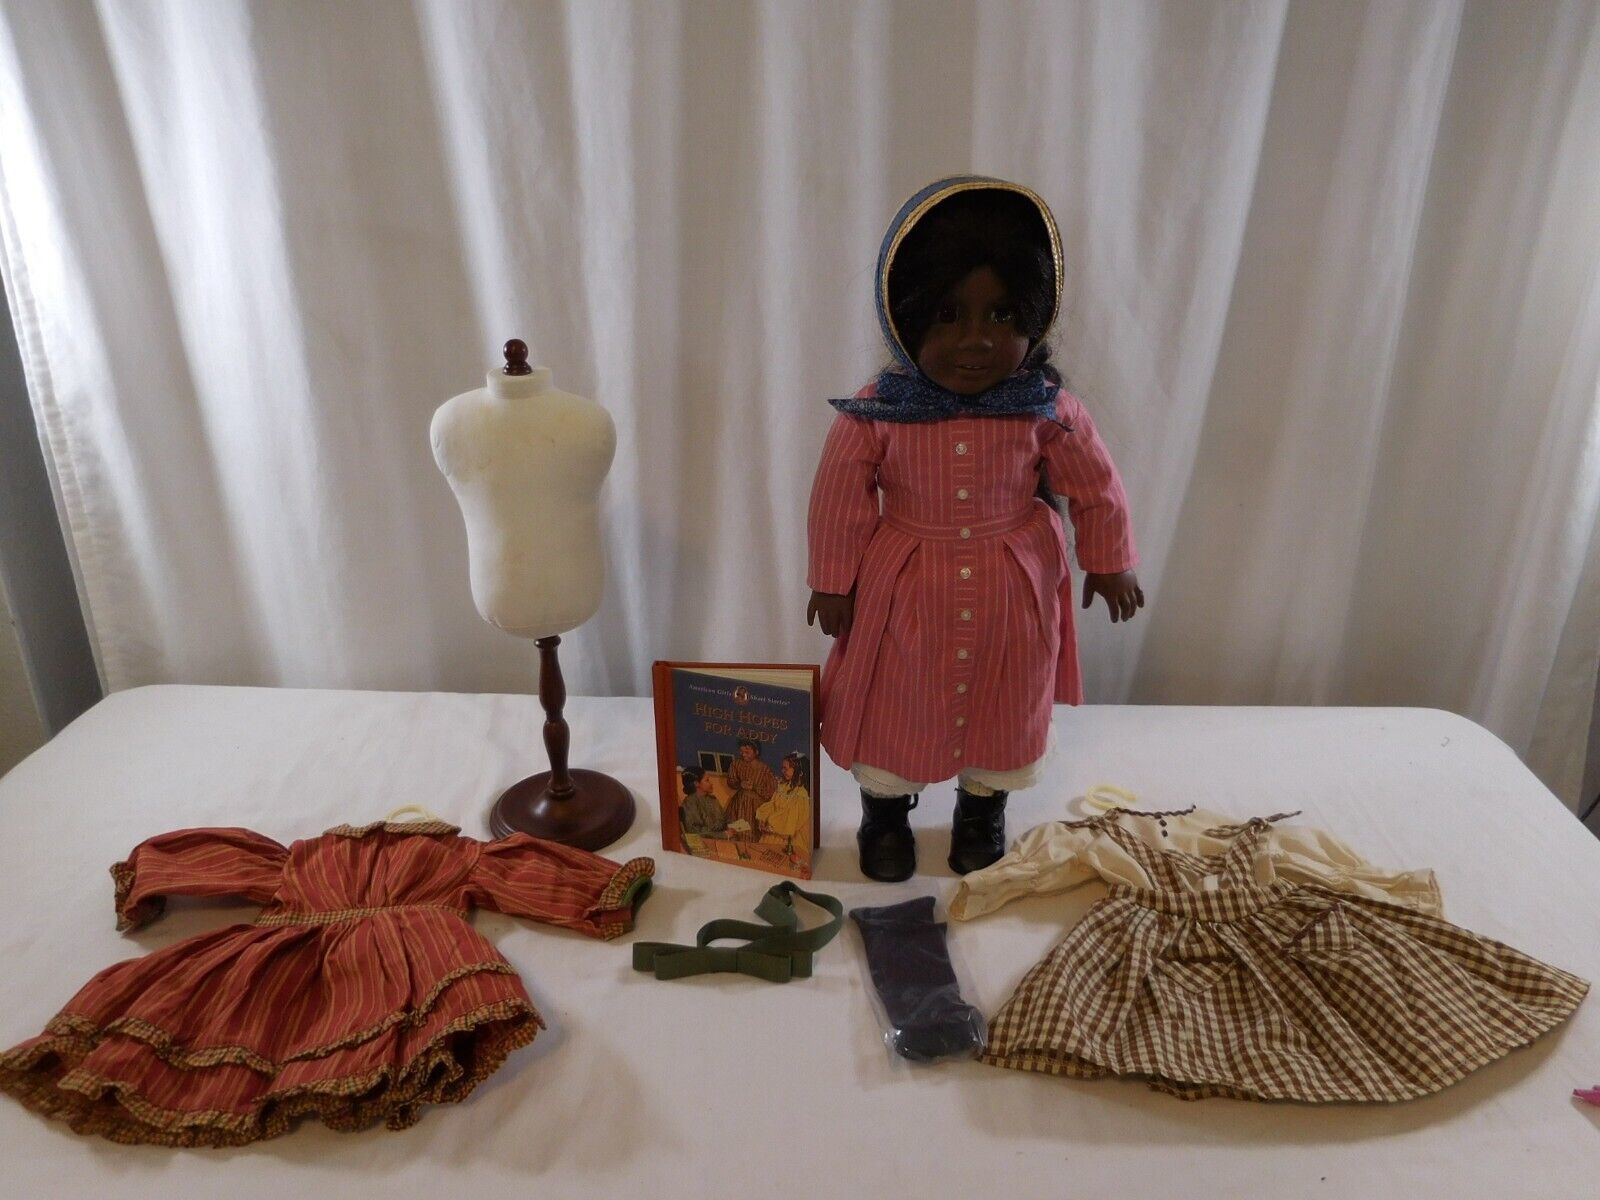 American Girl Doll Addy 1993 first original Pleasant Company +Accessories - $450.47